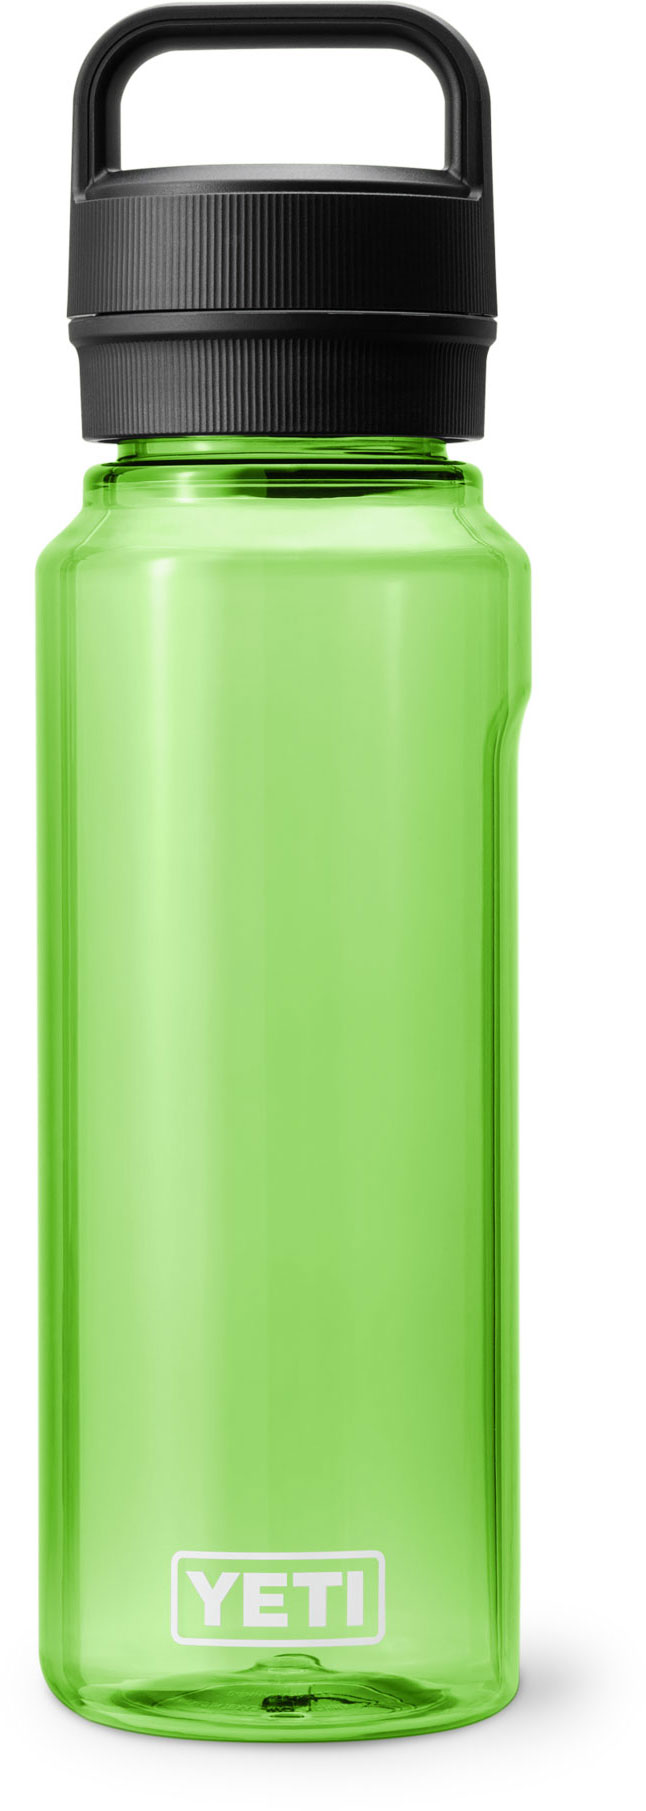 https://cs1.0ps.us/original/opplanet-yeti-yonder-1l-water-bottle-canopy-green-1-liter-21071501446-main